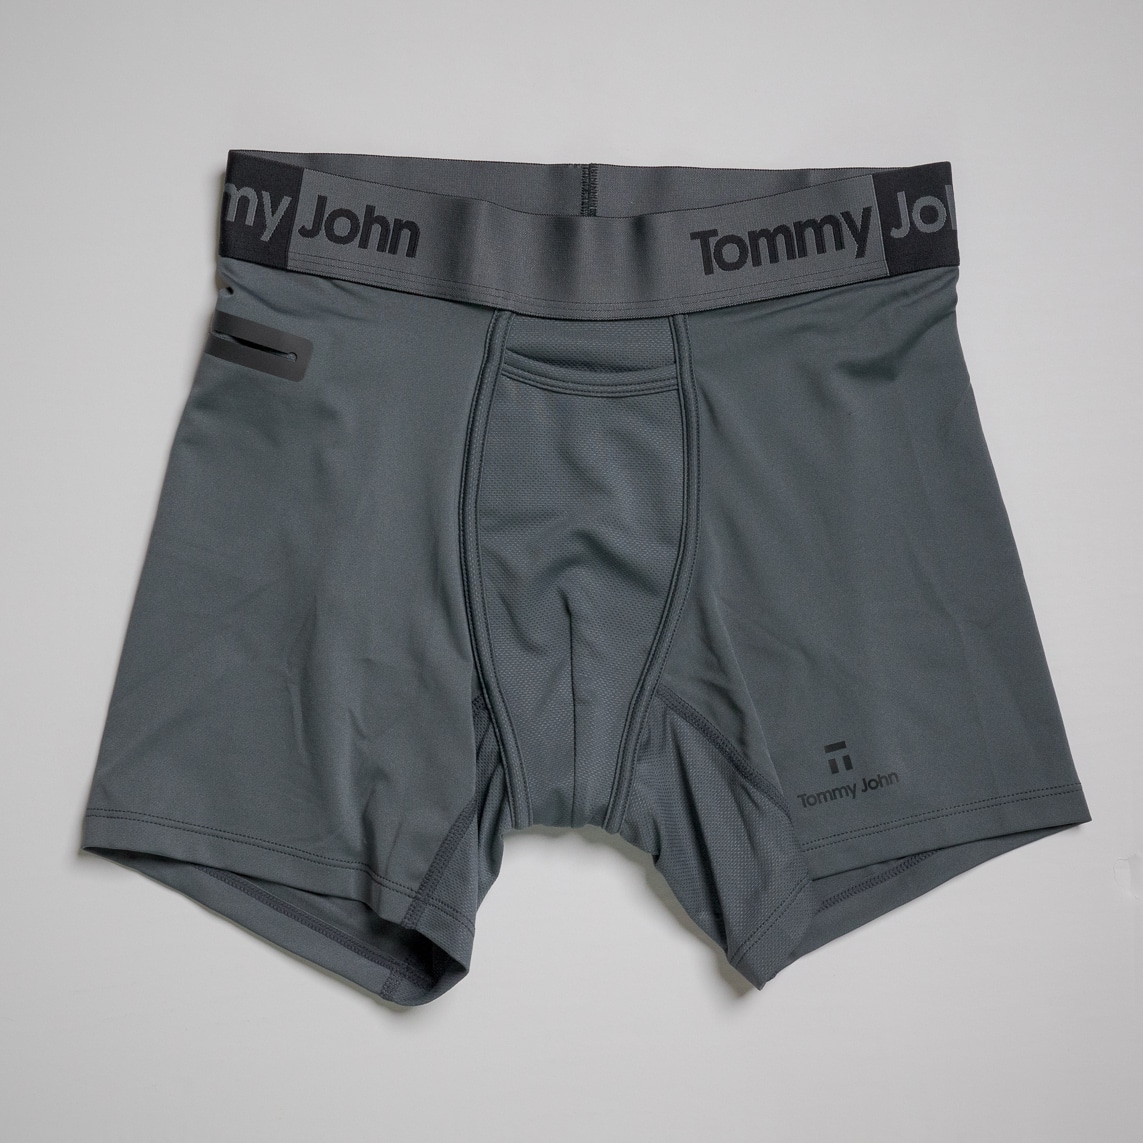 Tommy John 360 Sport Boxer Briefs